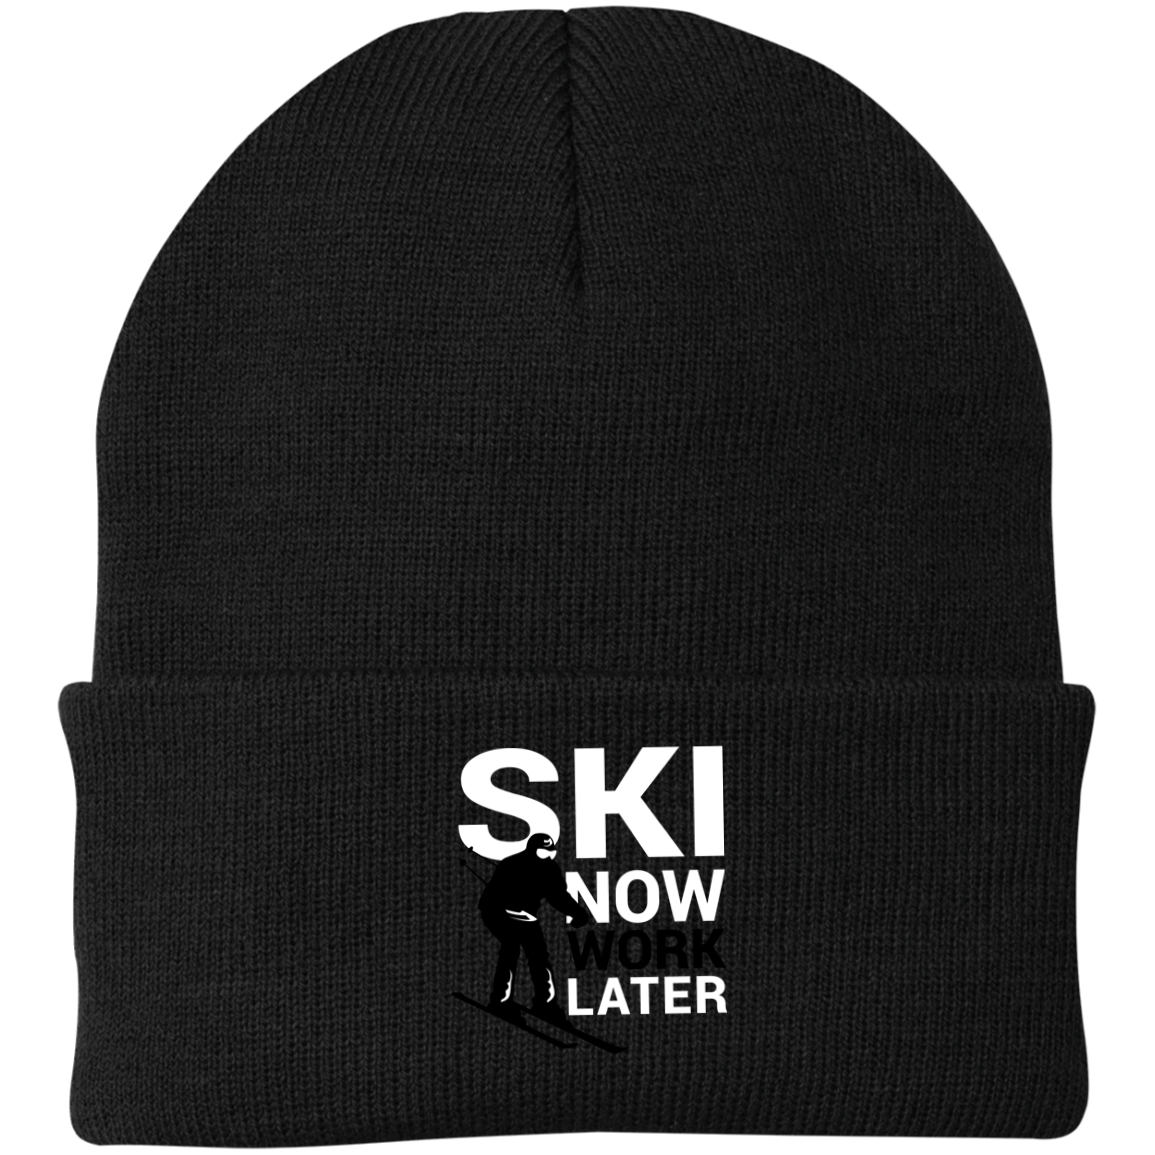 4B-Ski-Now-work-later Knit Cap - Powderaddicts